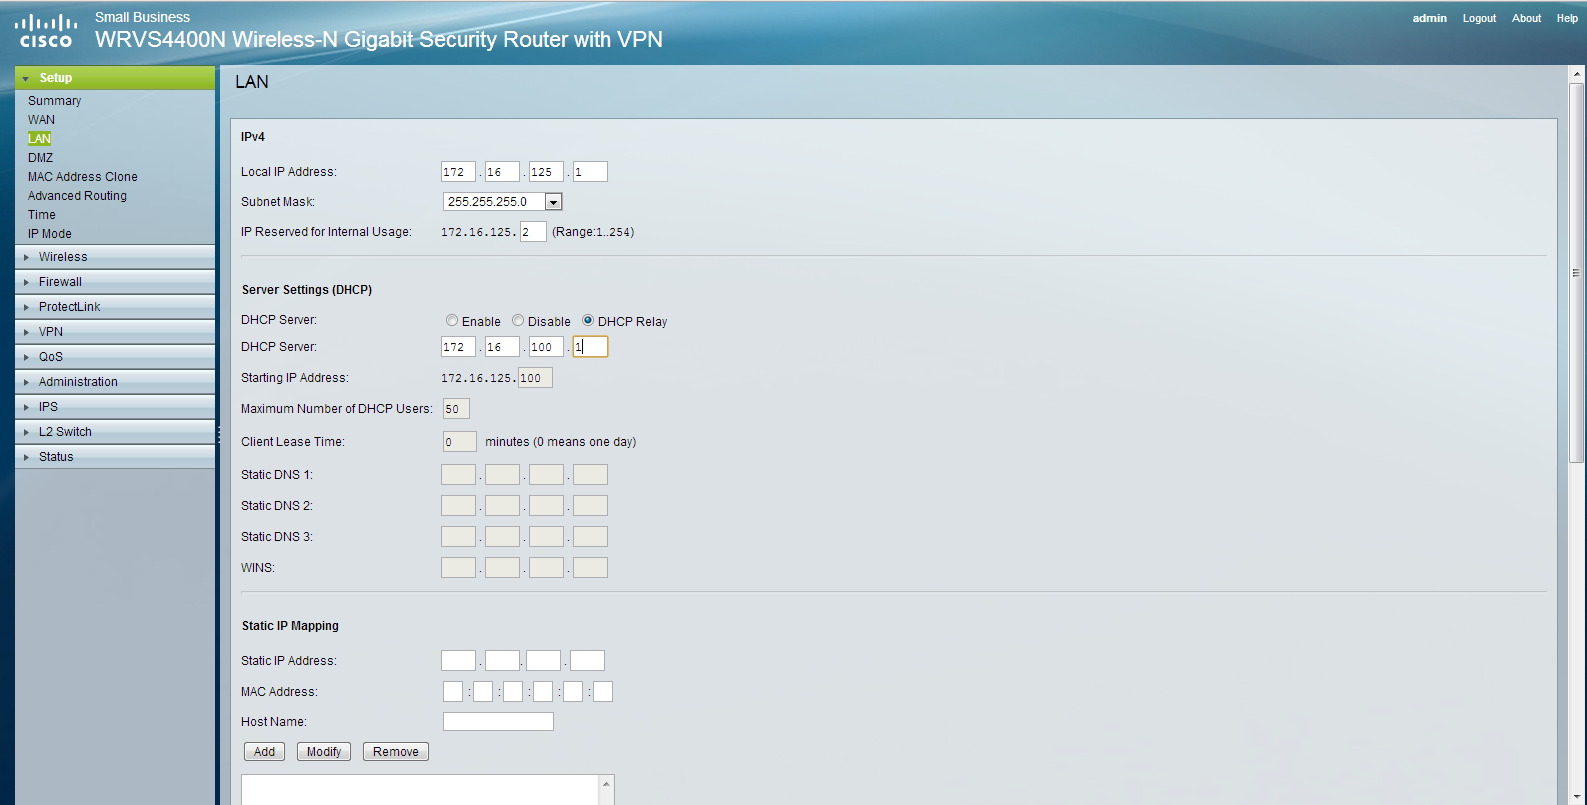 cisco wrvs4400n wireless-n gigabit security router vpn settings